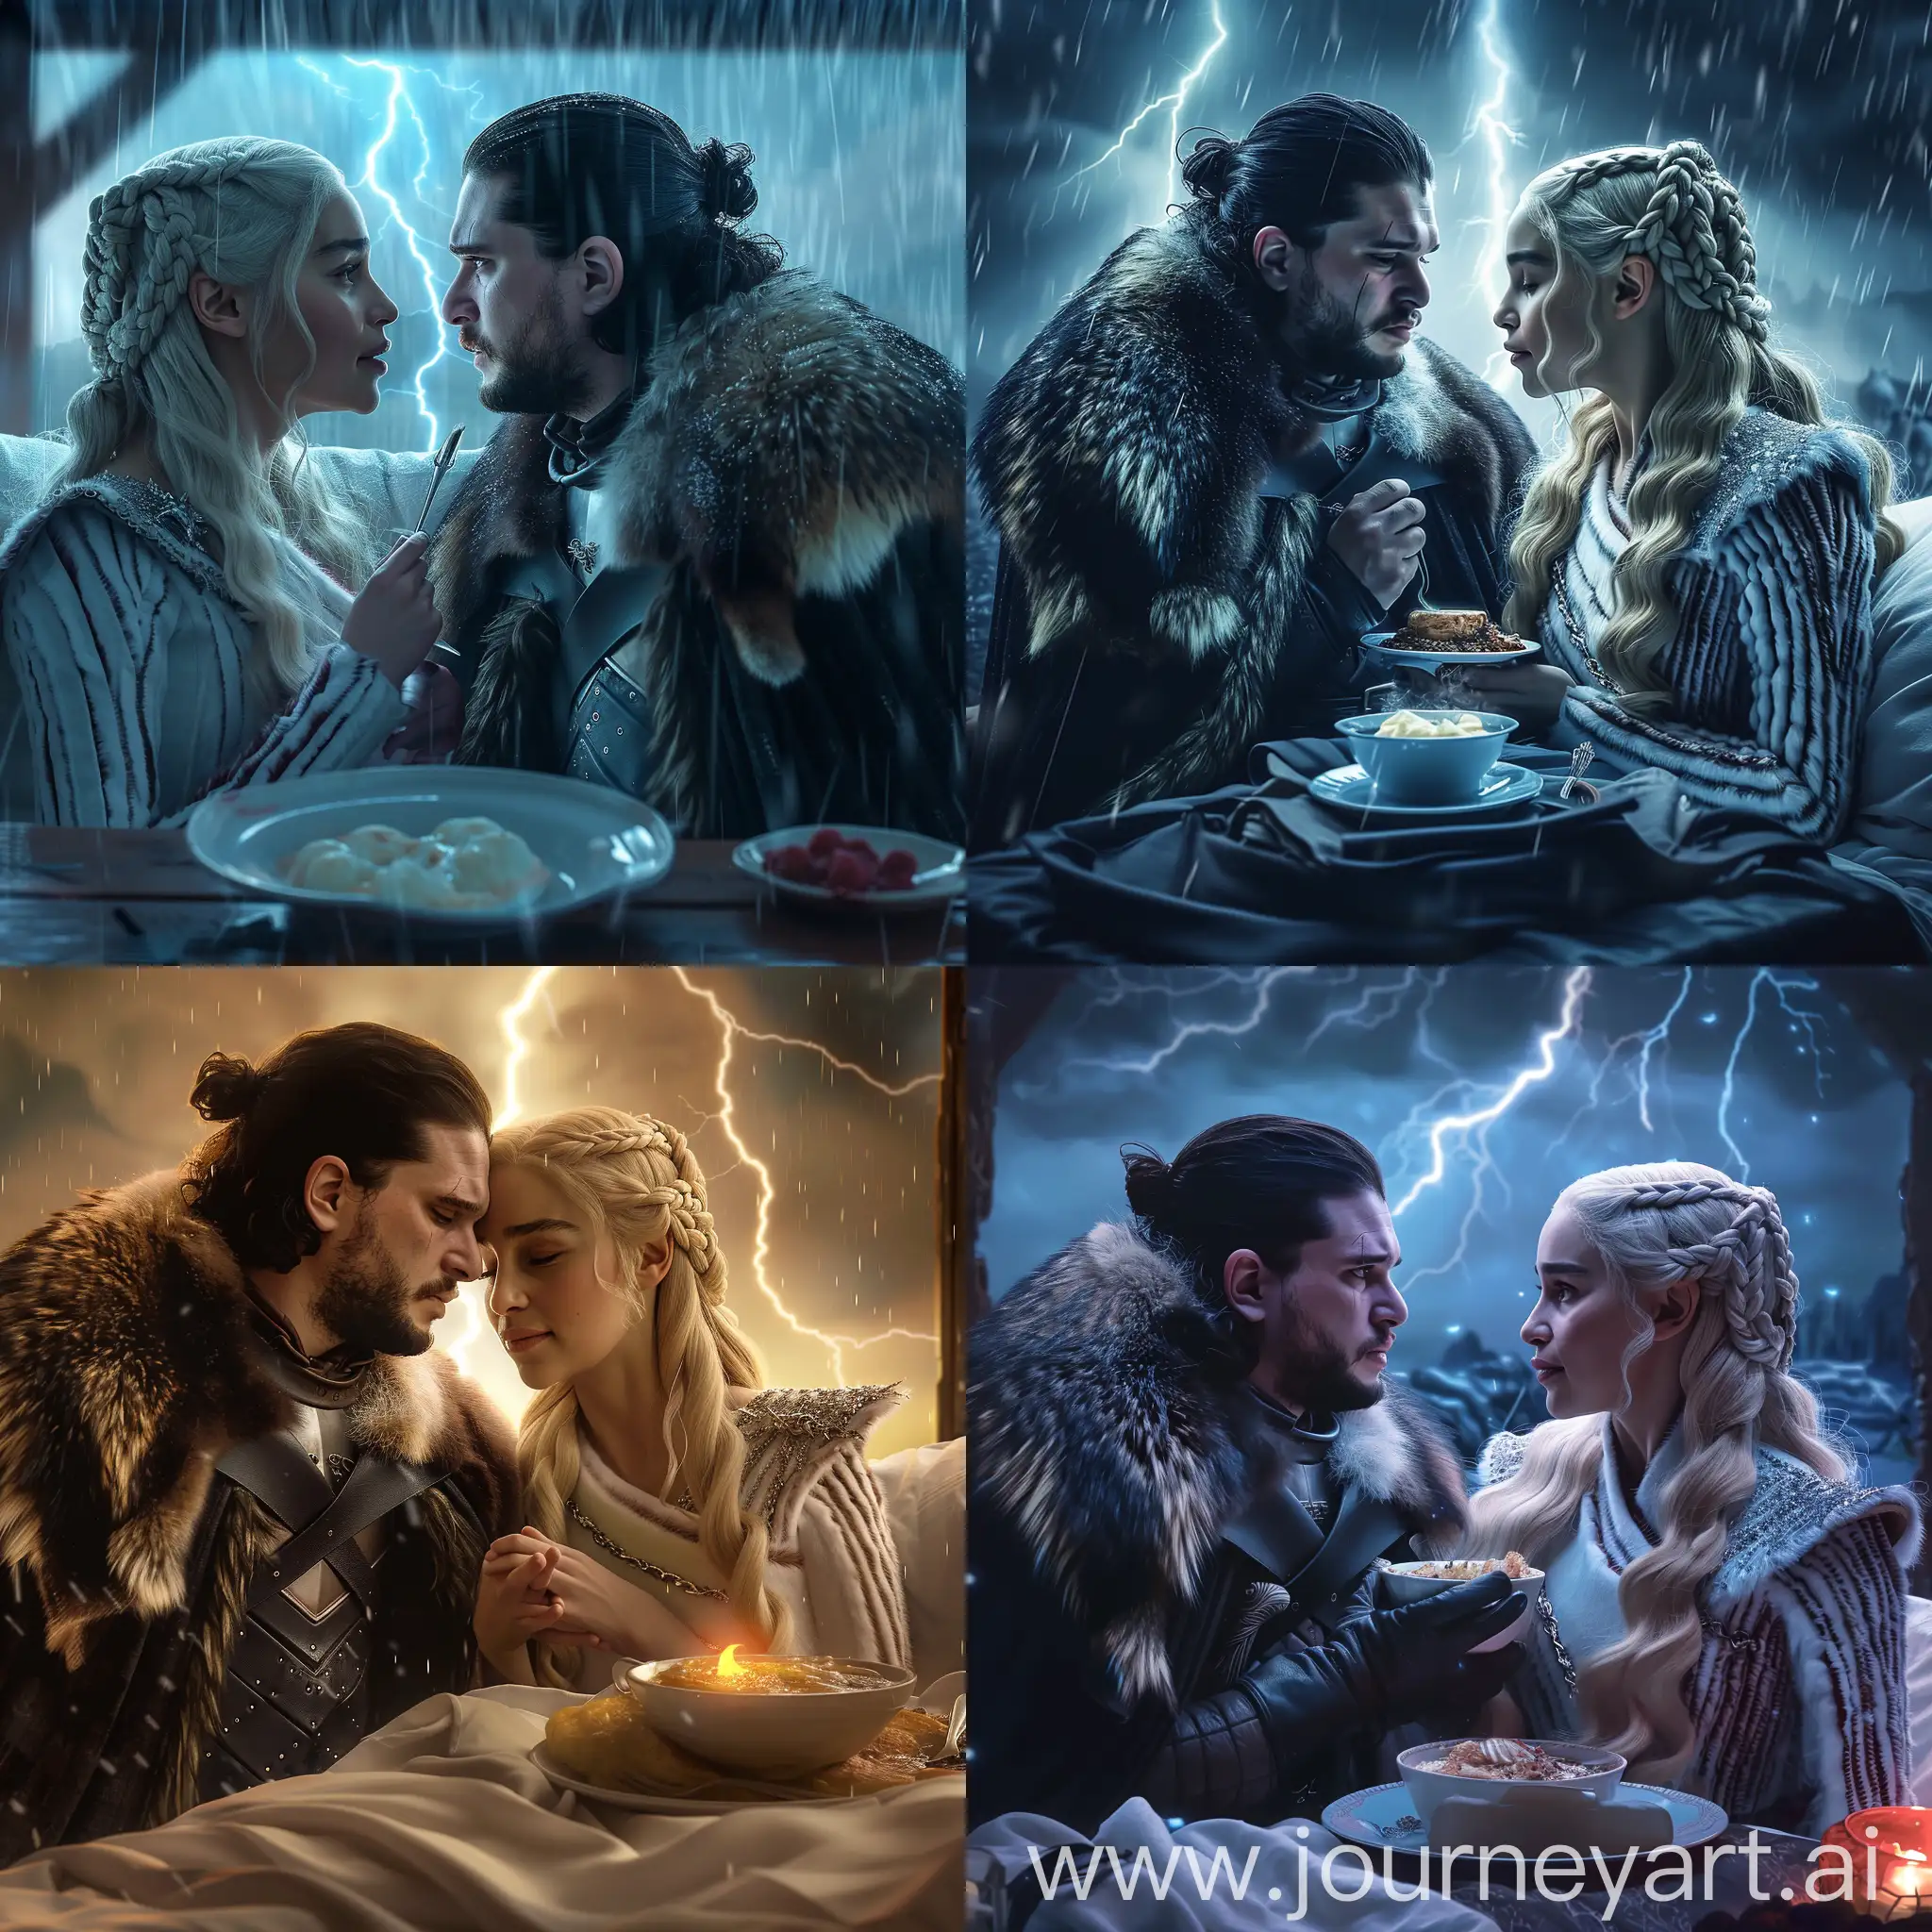 Jon-Snow-and-Daenerys-Enjoying-a-Romantic-Breakfast-in-Bed